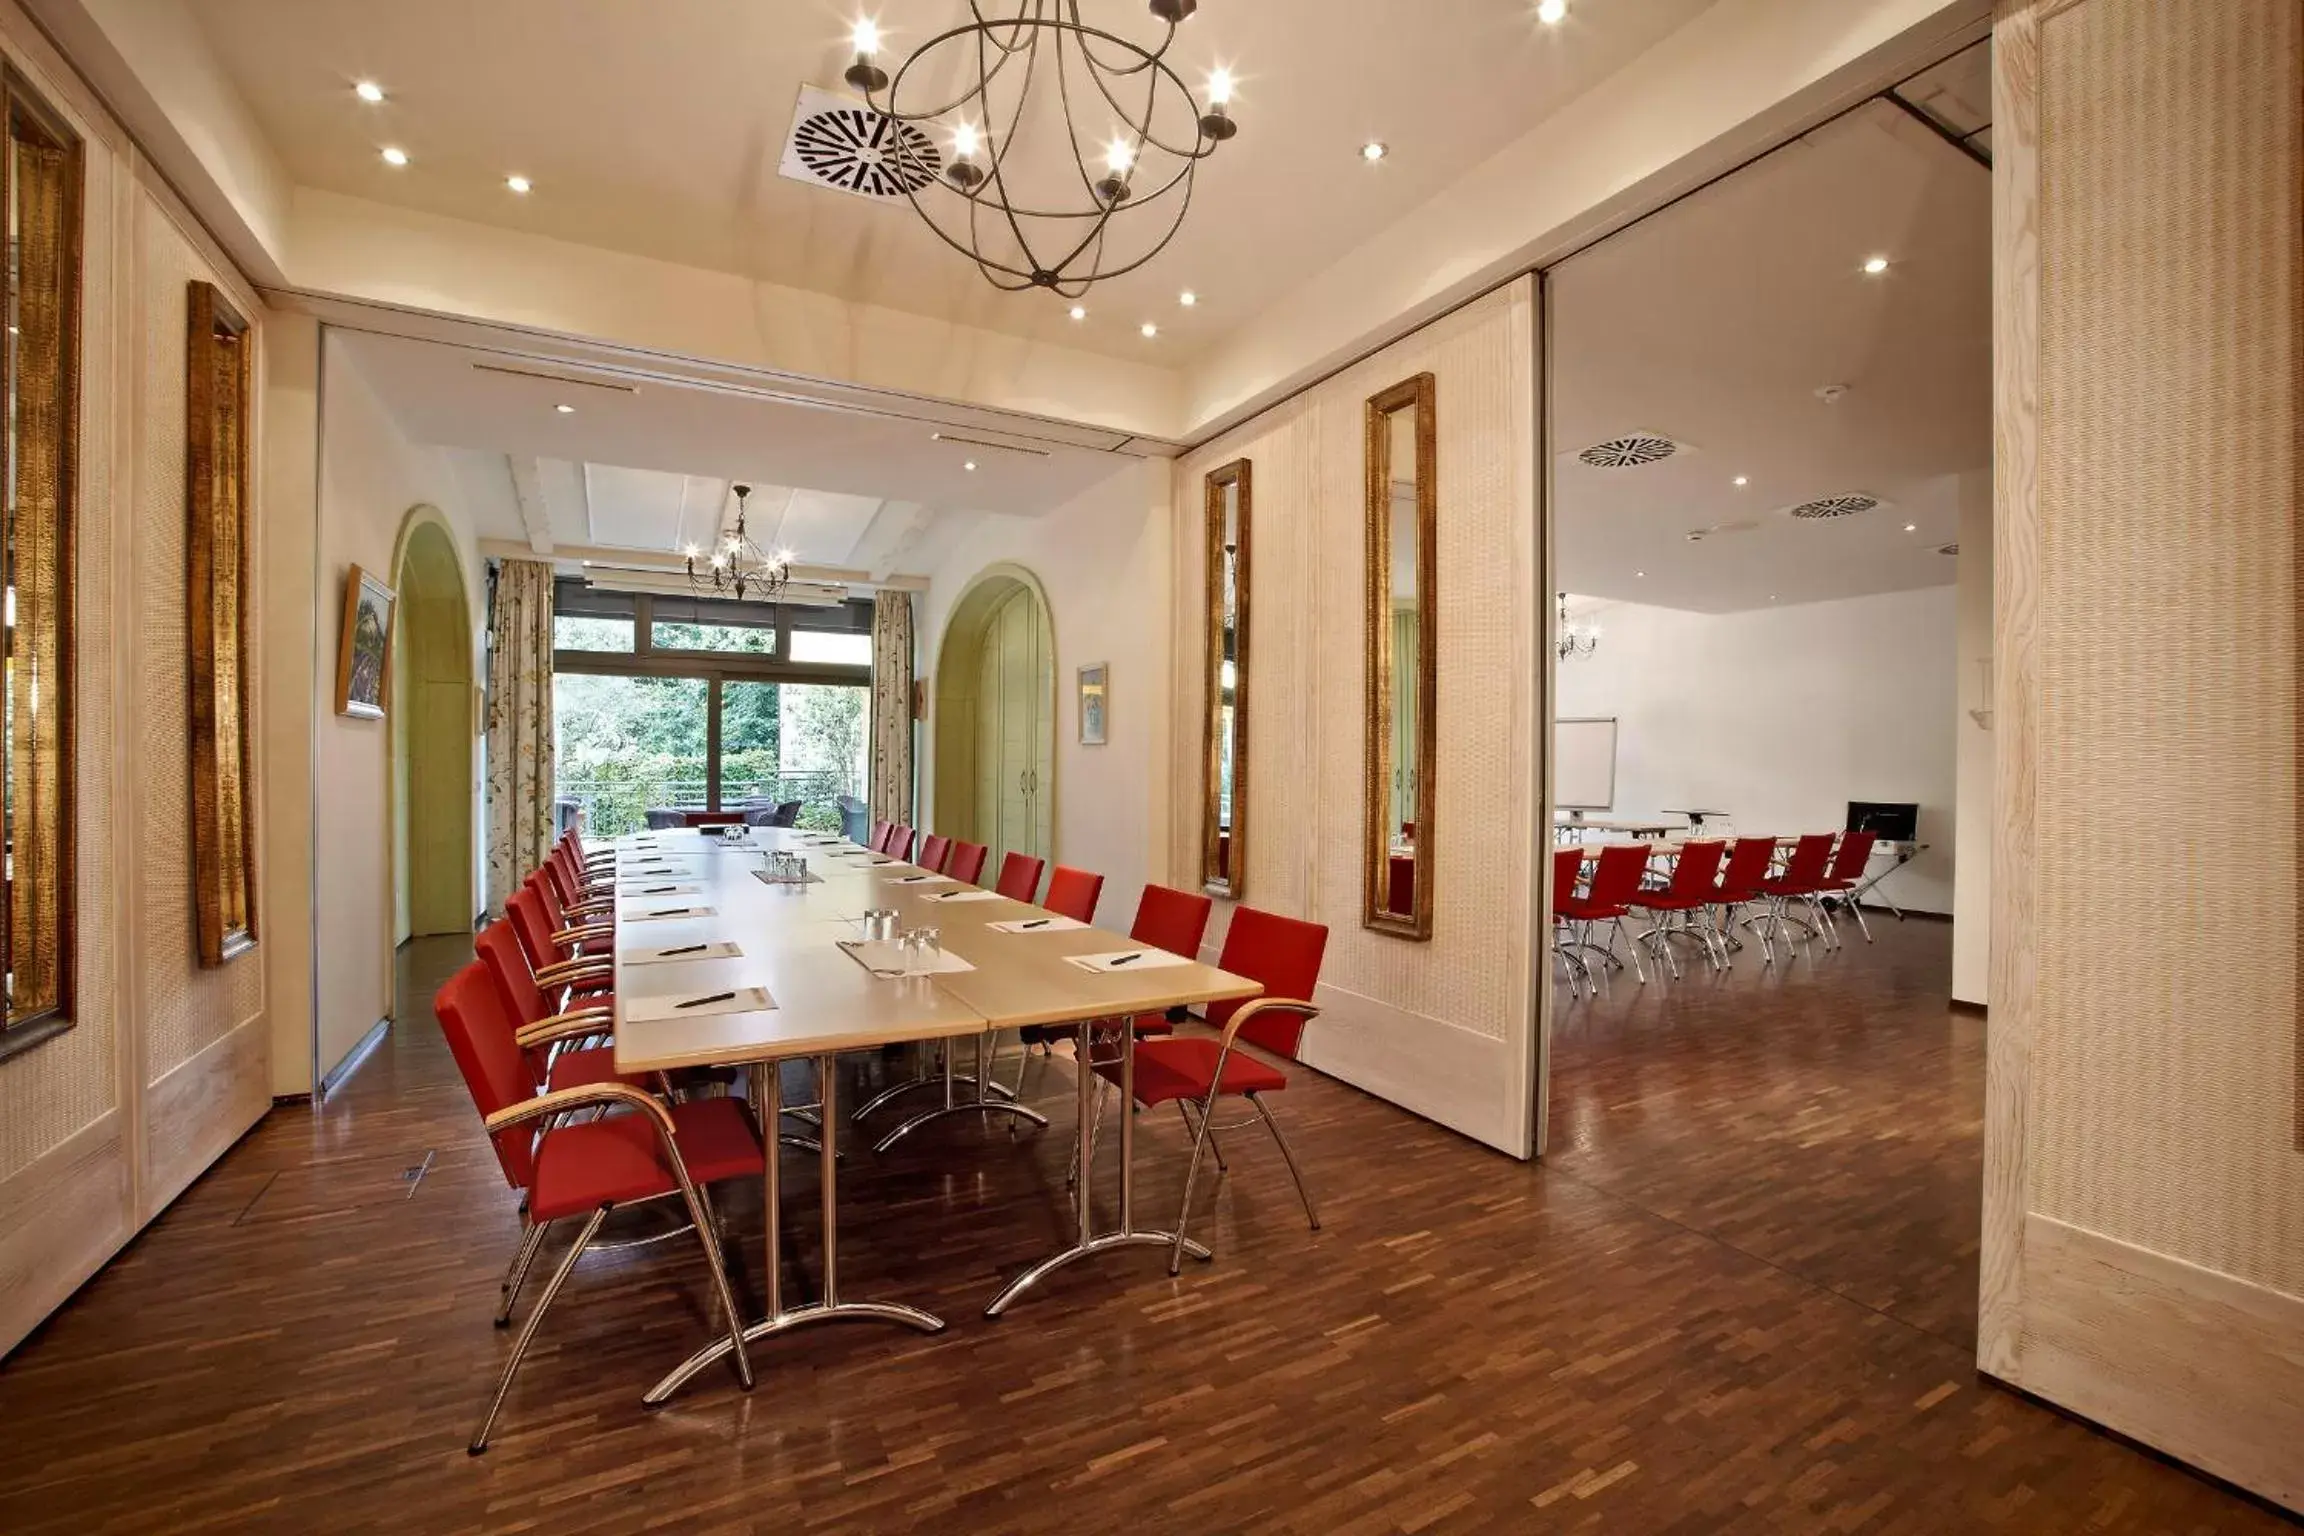 Meeting/conference room in Hotel Hirschen in Freiburg-Lehen